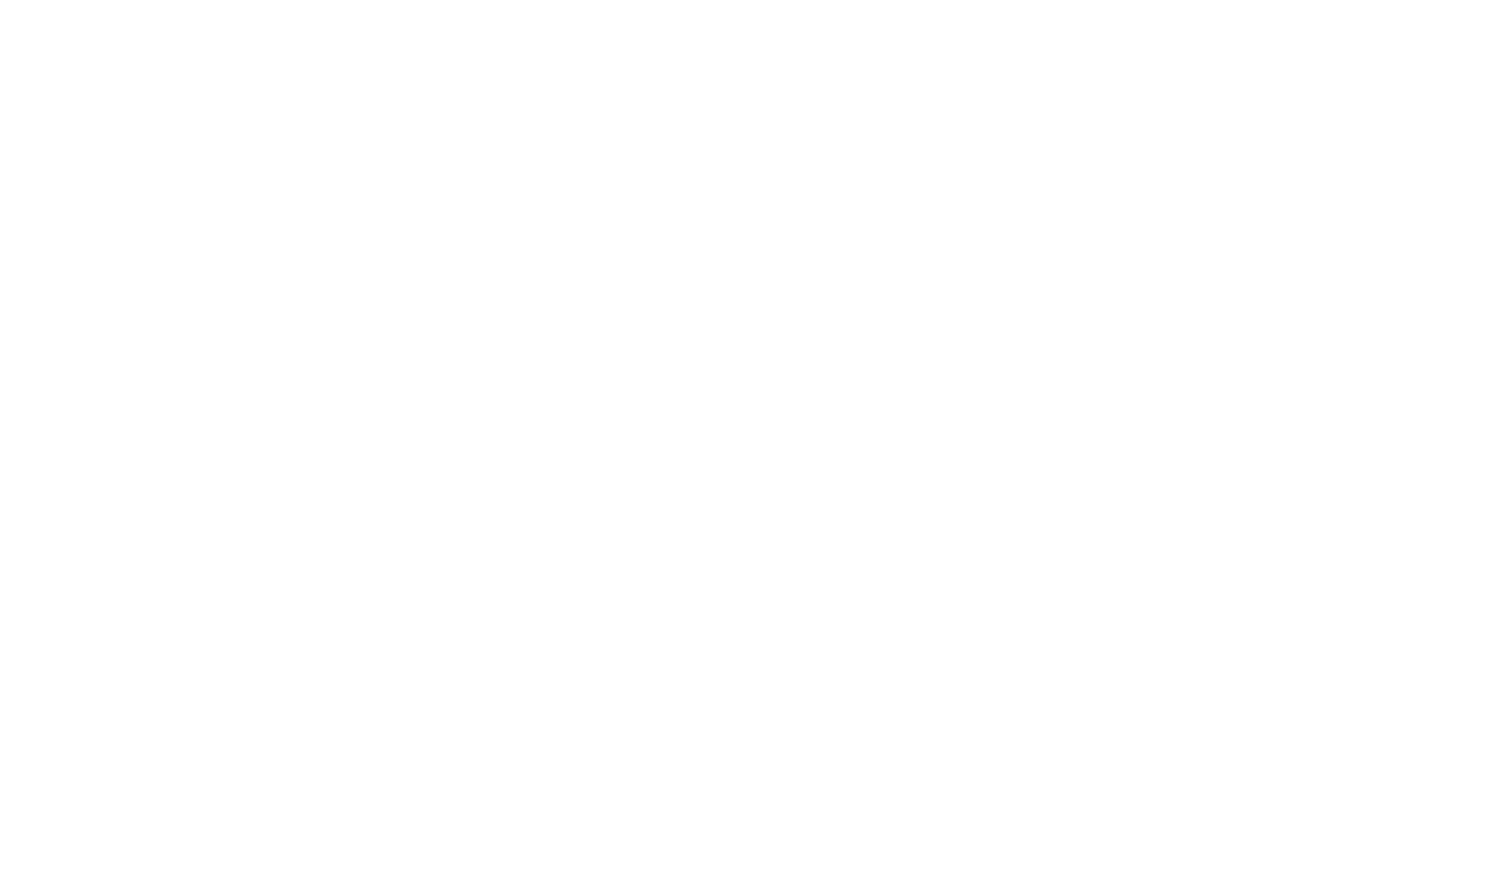 Primal Fitness